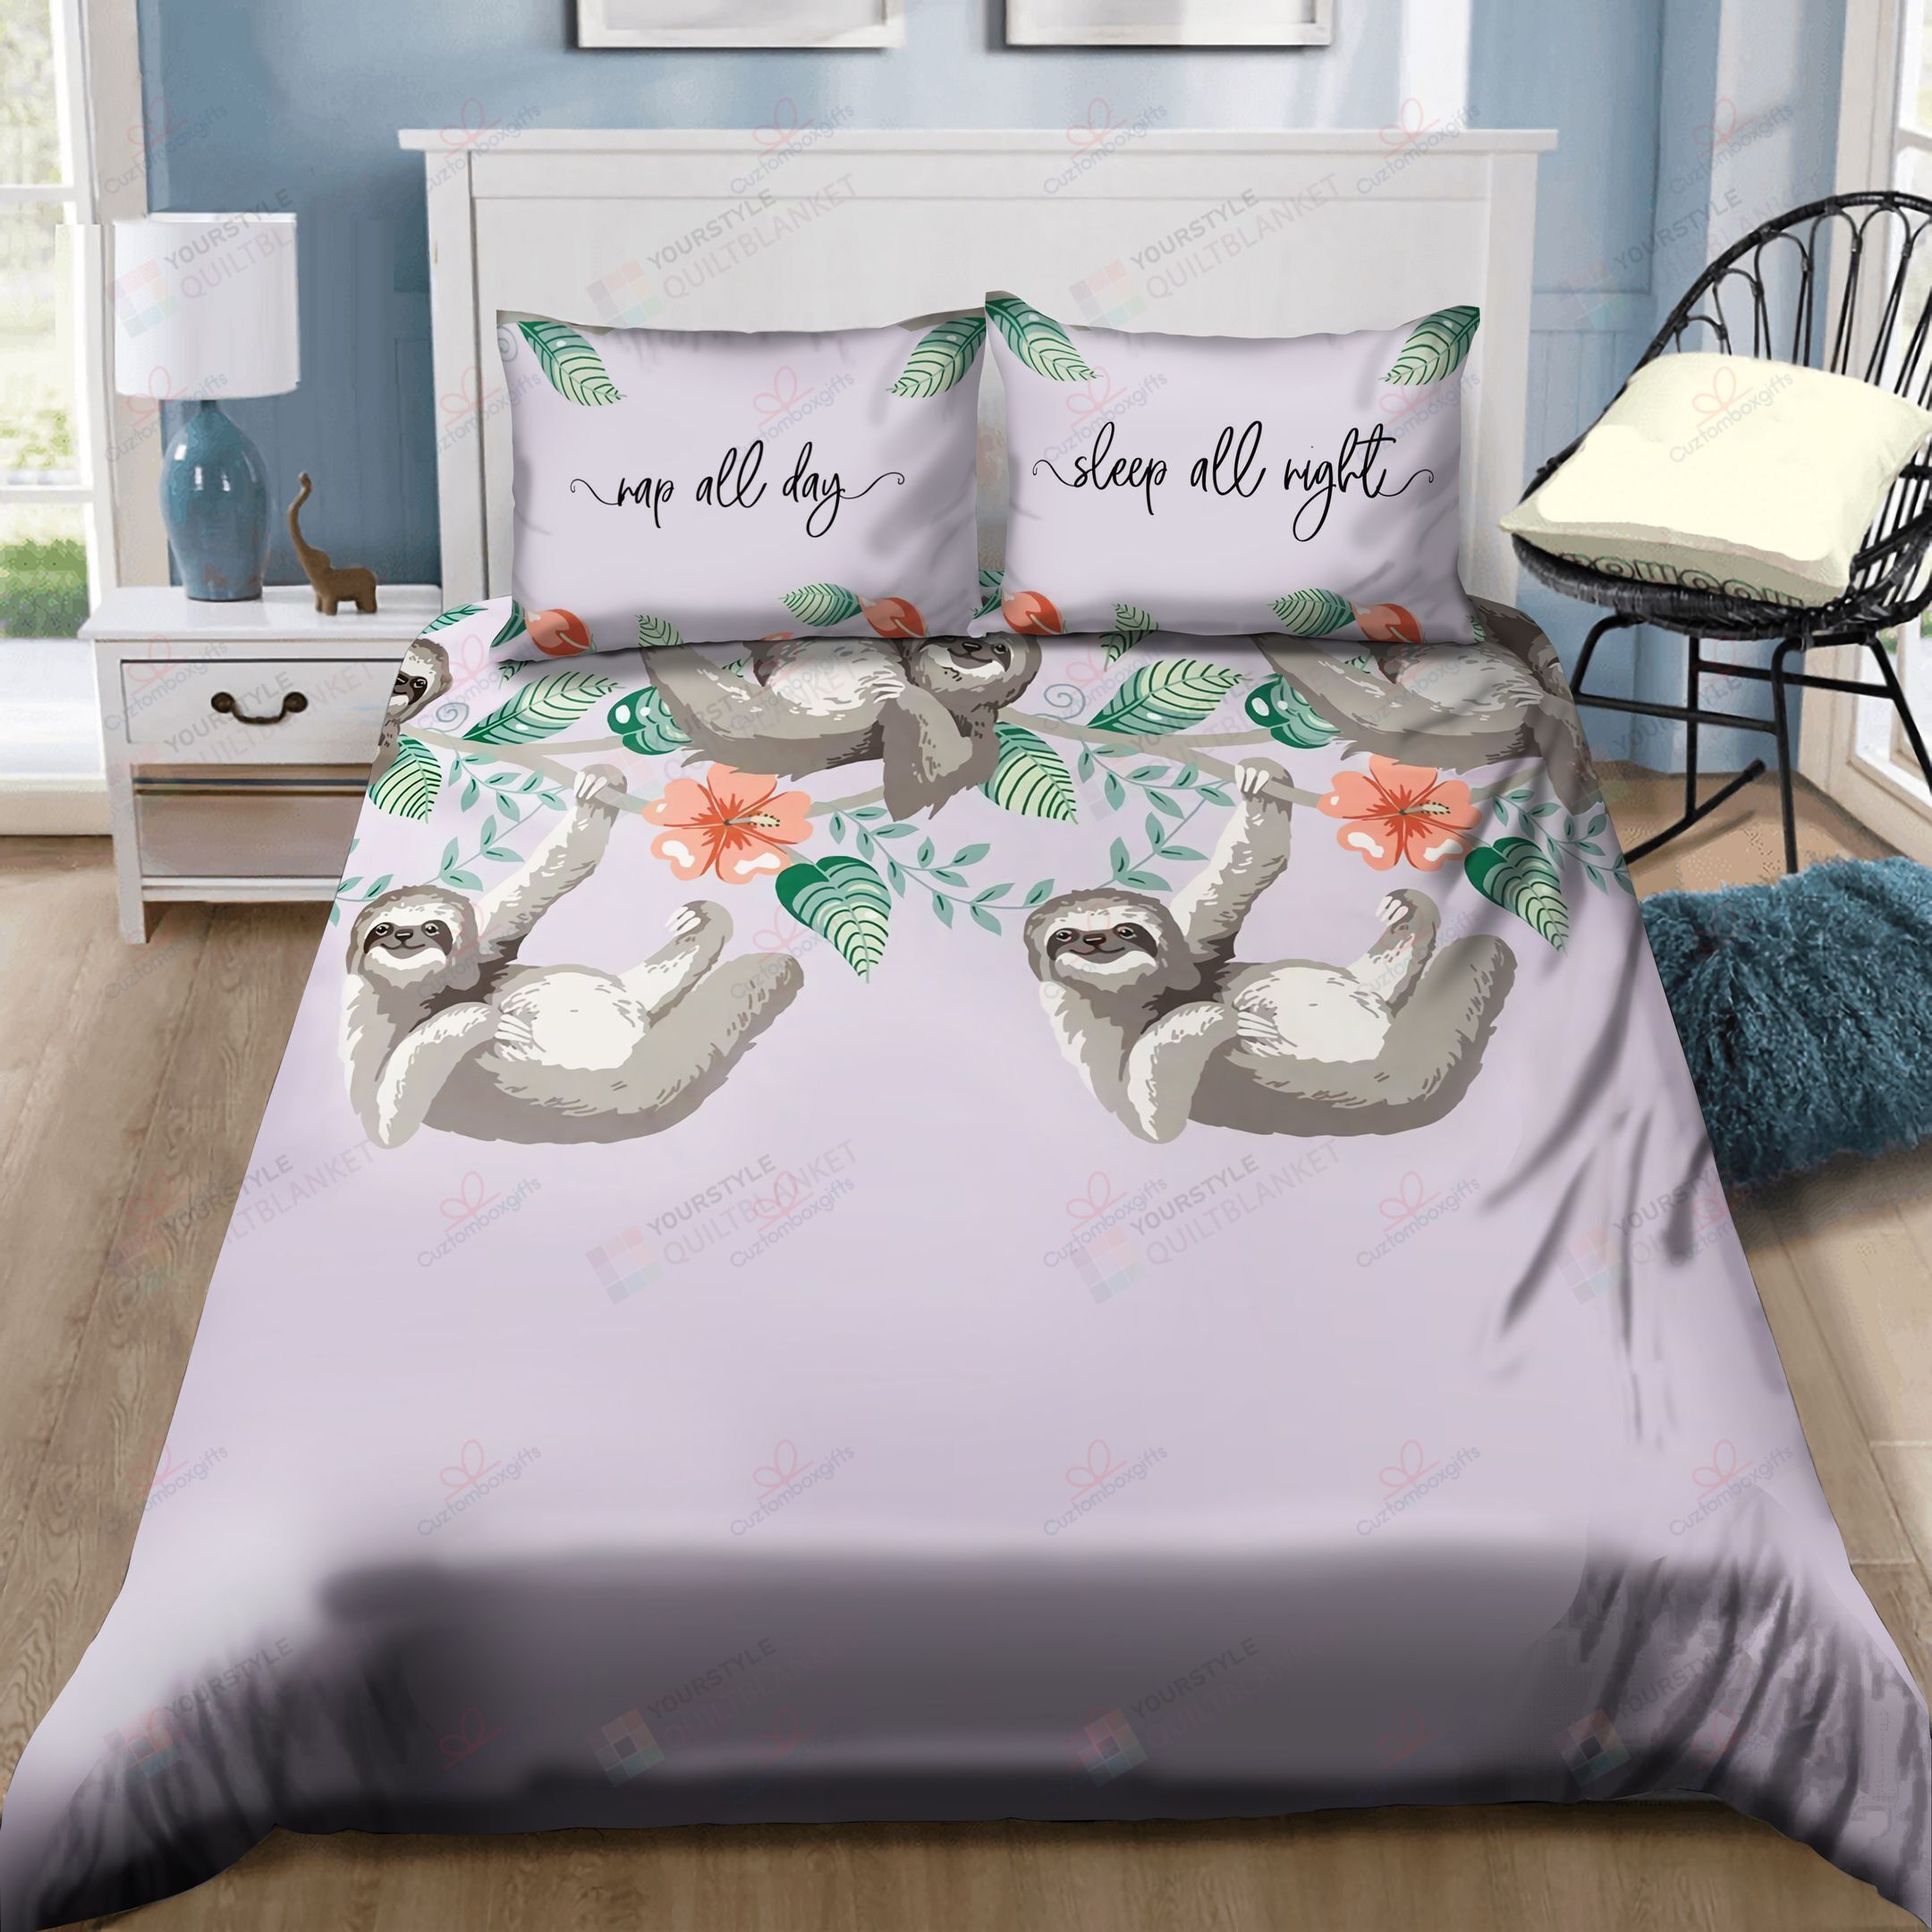 Sloth Bedding Sets (Duvet Cover & Pillow Cases)